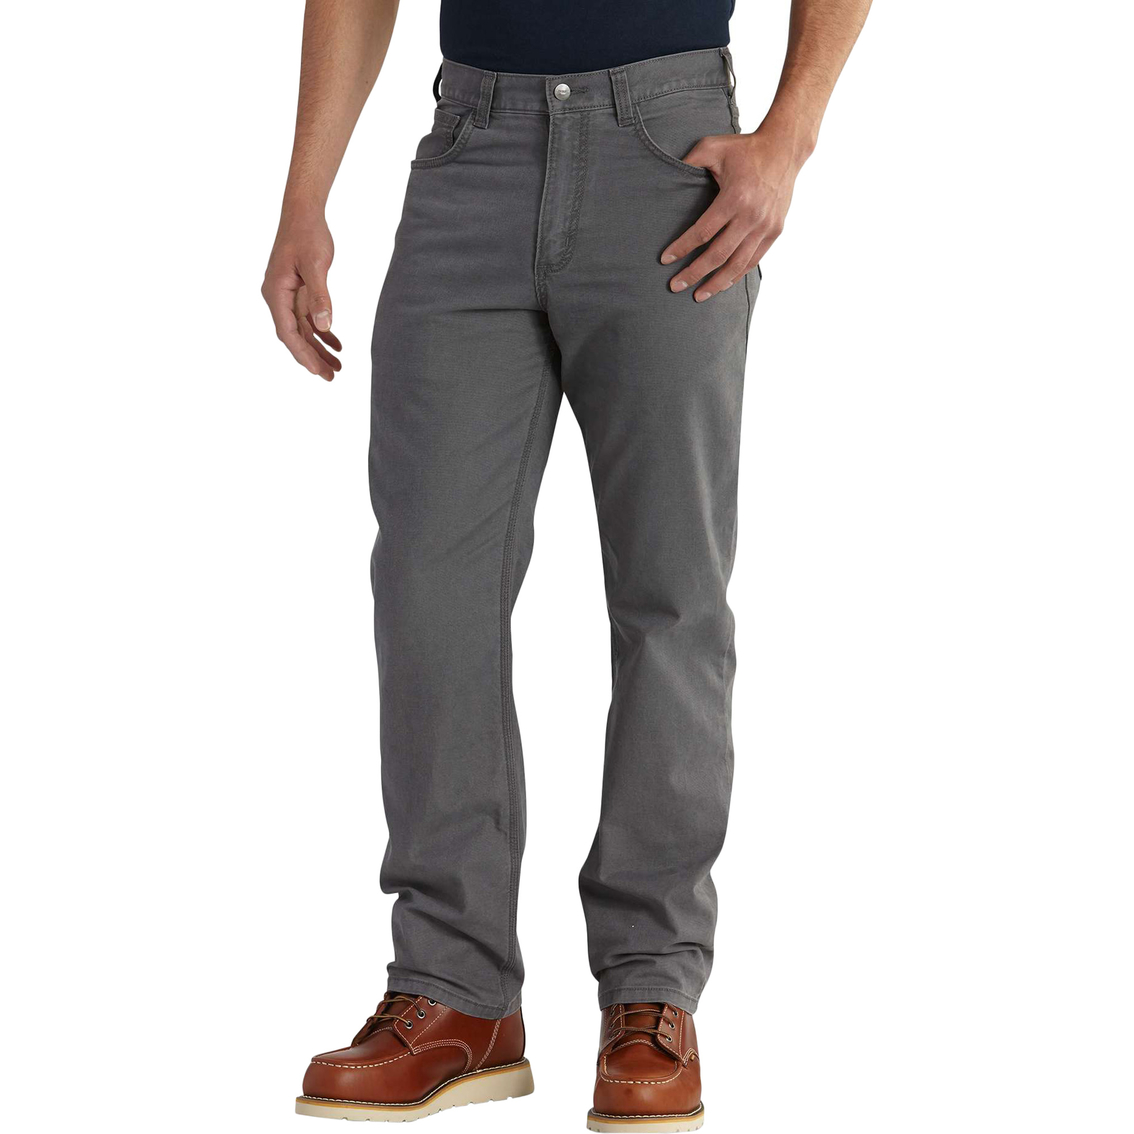 Carhartt Rugged Flex Rigby Five Pocket Pants | Pants | Clothing ...